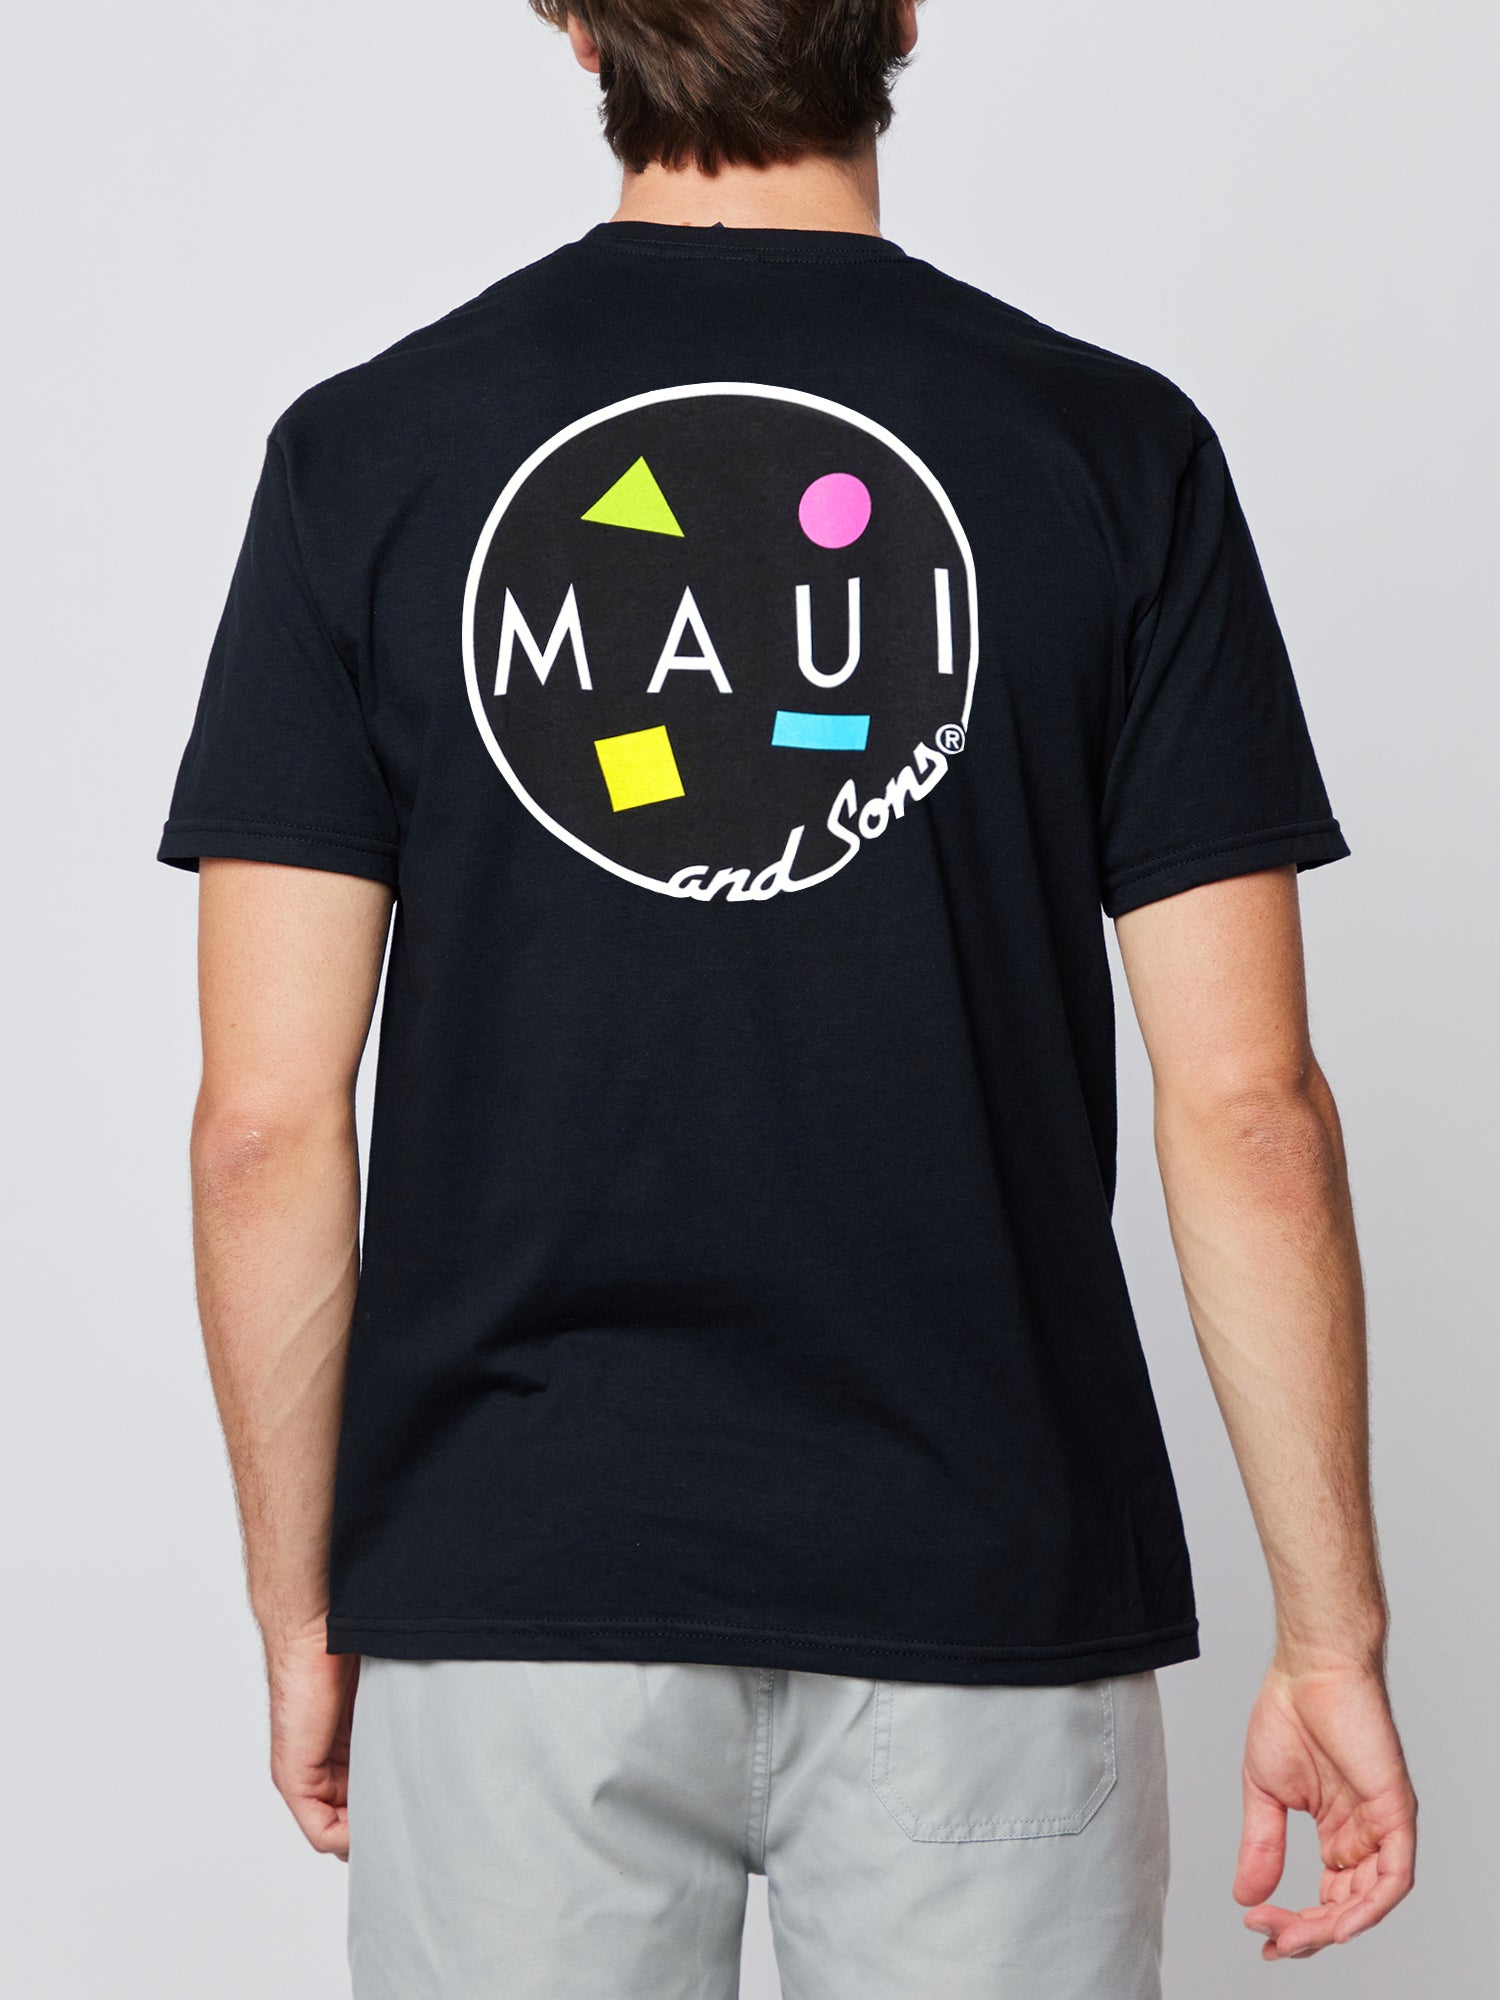 Hot Maui and Sons Mens Black Tshirt Size XS-4XL Casual Short Sleeve Men T  Shirt Men Clothing Ropa Hombre Camisetas Dropshipping Black : :  Fashion